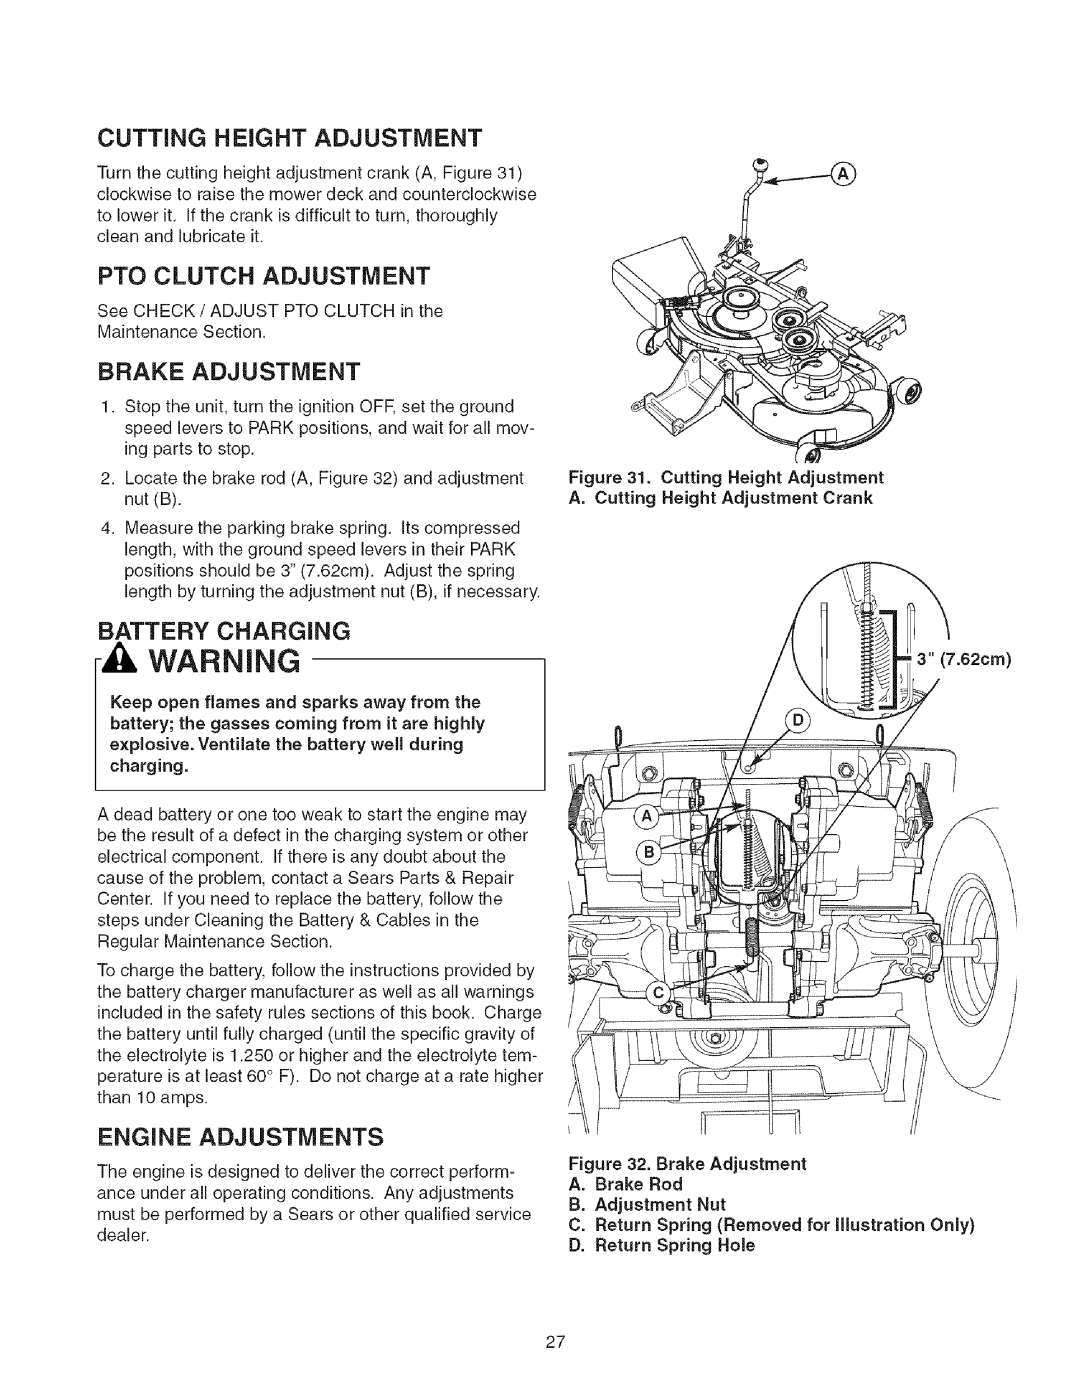 Craftsman 107.27768 manual Cutting Height Adjustment, Pto Clutch Adjustment, Brake Adjustment, Battery Charging, 3 7.62cm 